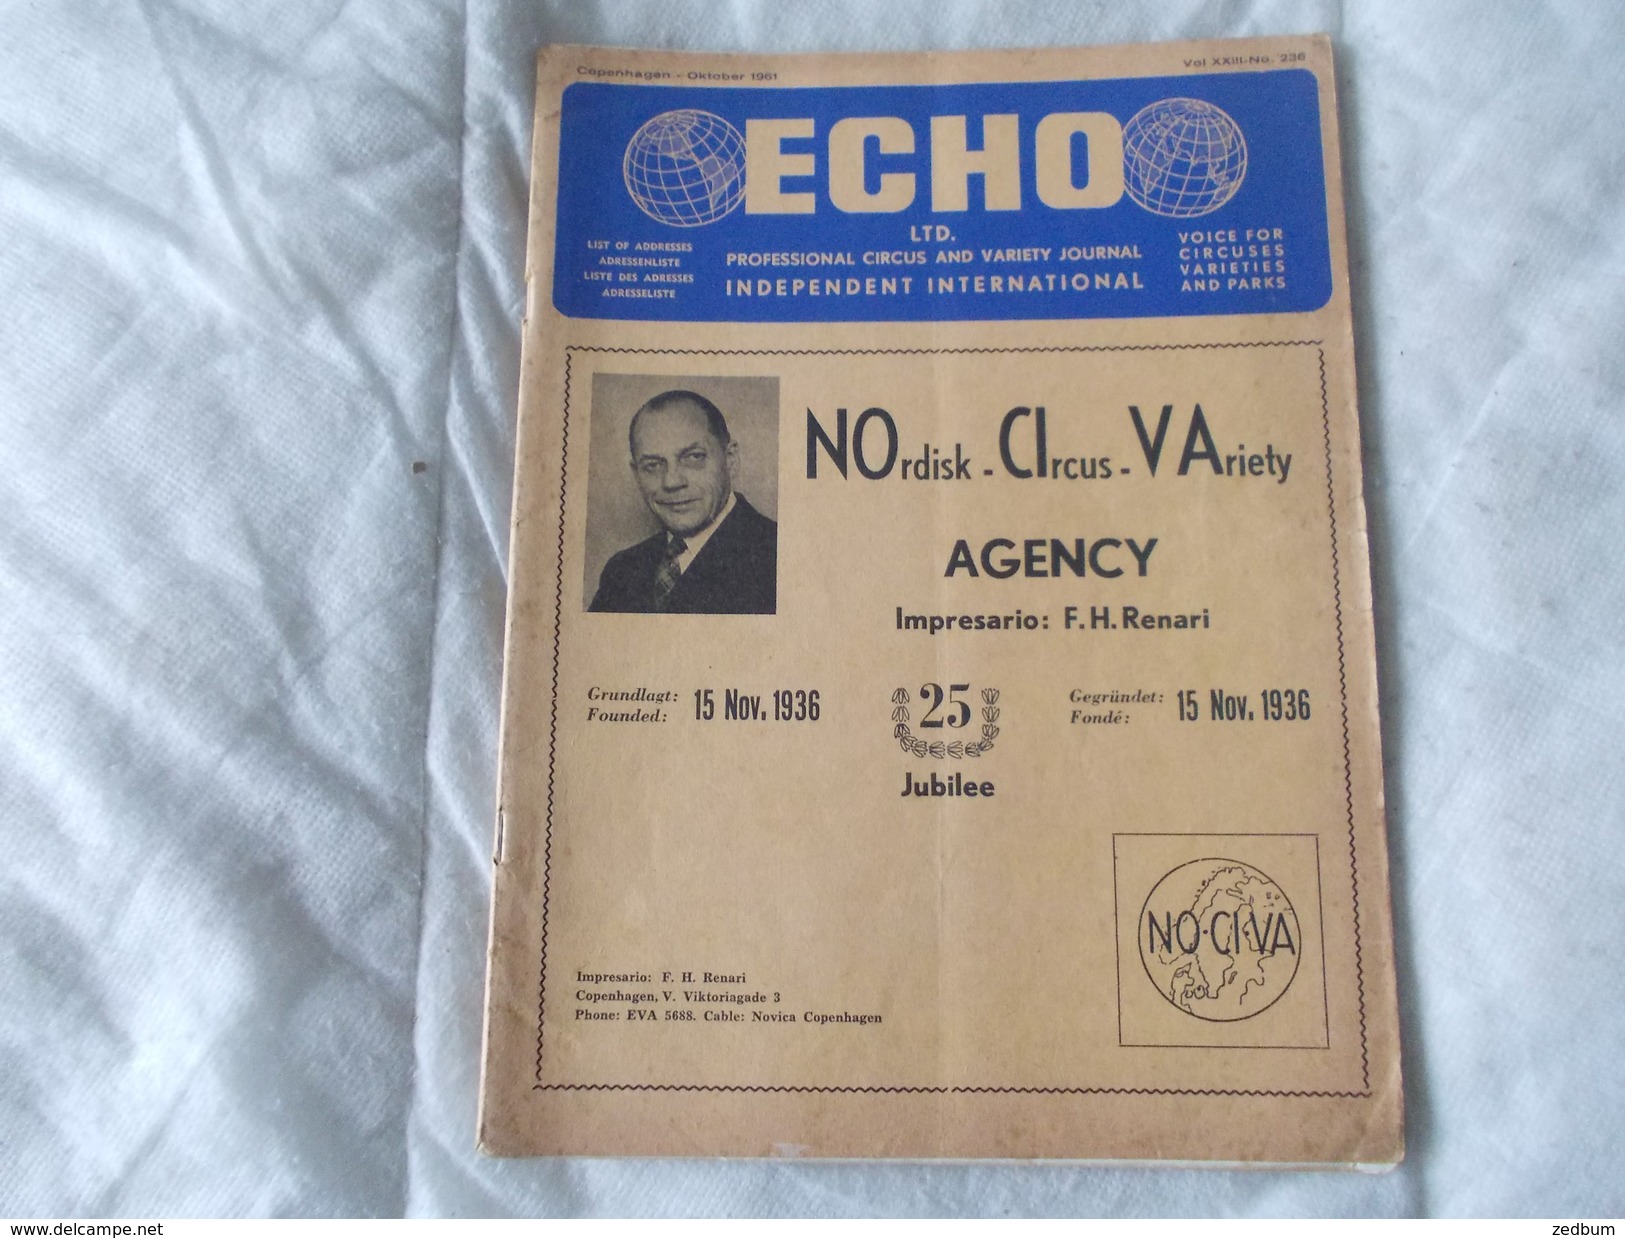 ECHO LTD Professional Circus And Variety Journal Independent International N° 236 October 1961 - Unterhaltung